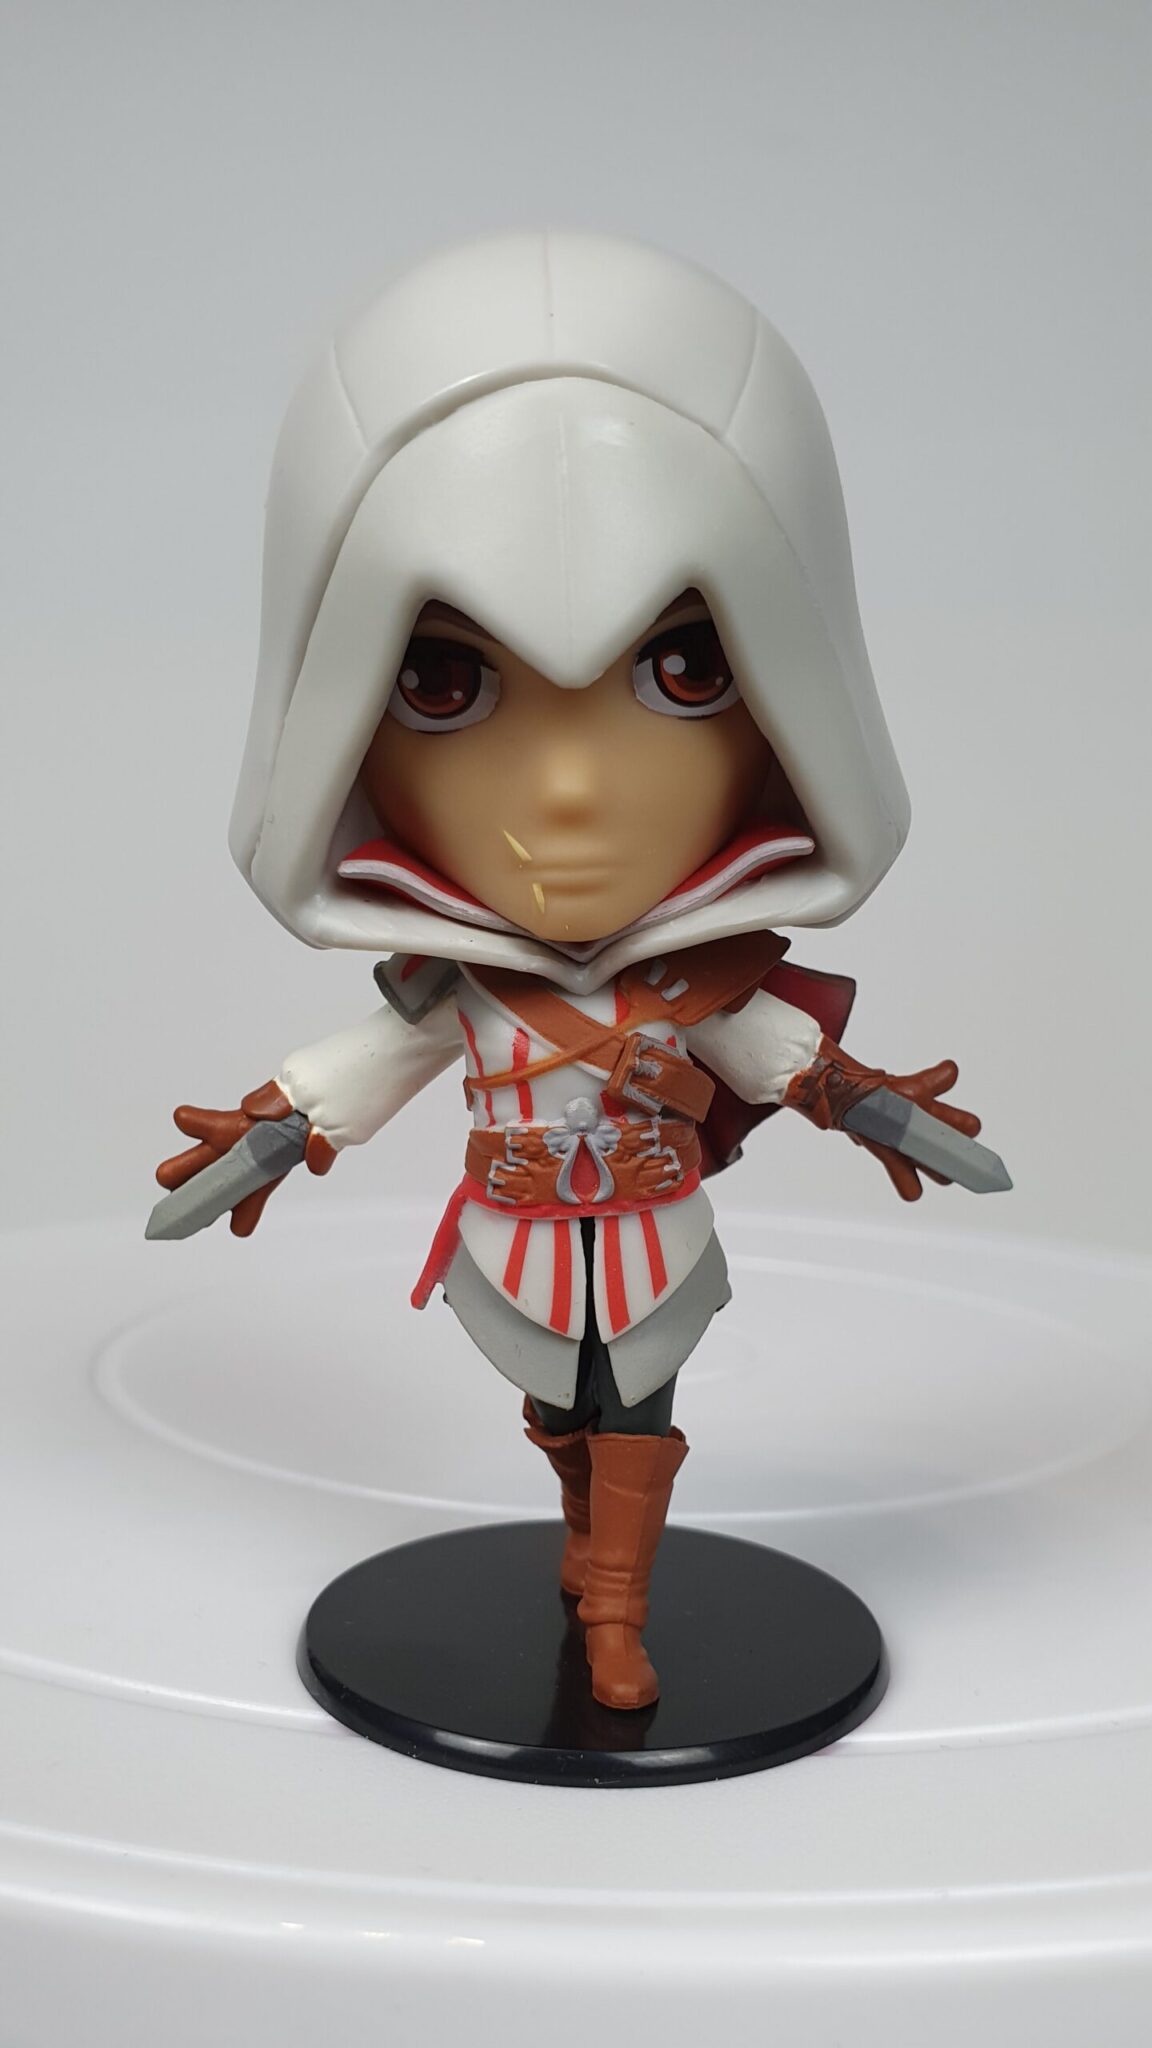 Assassin’s Creed Ubi Heroes Chibi Figurka/Figurine/Statue - Unboxing PL